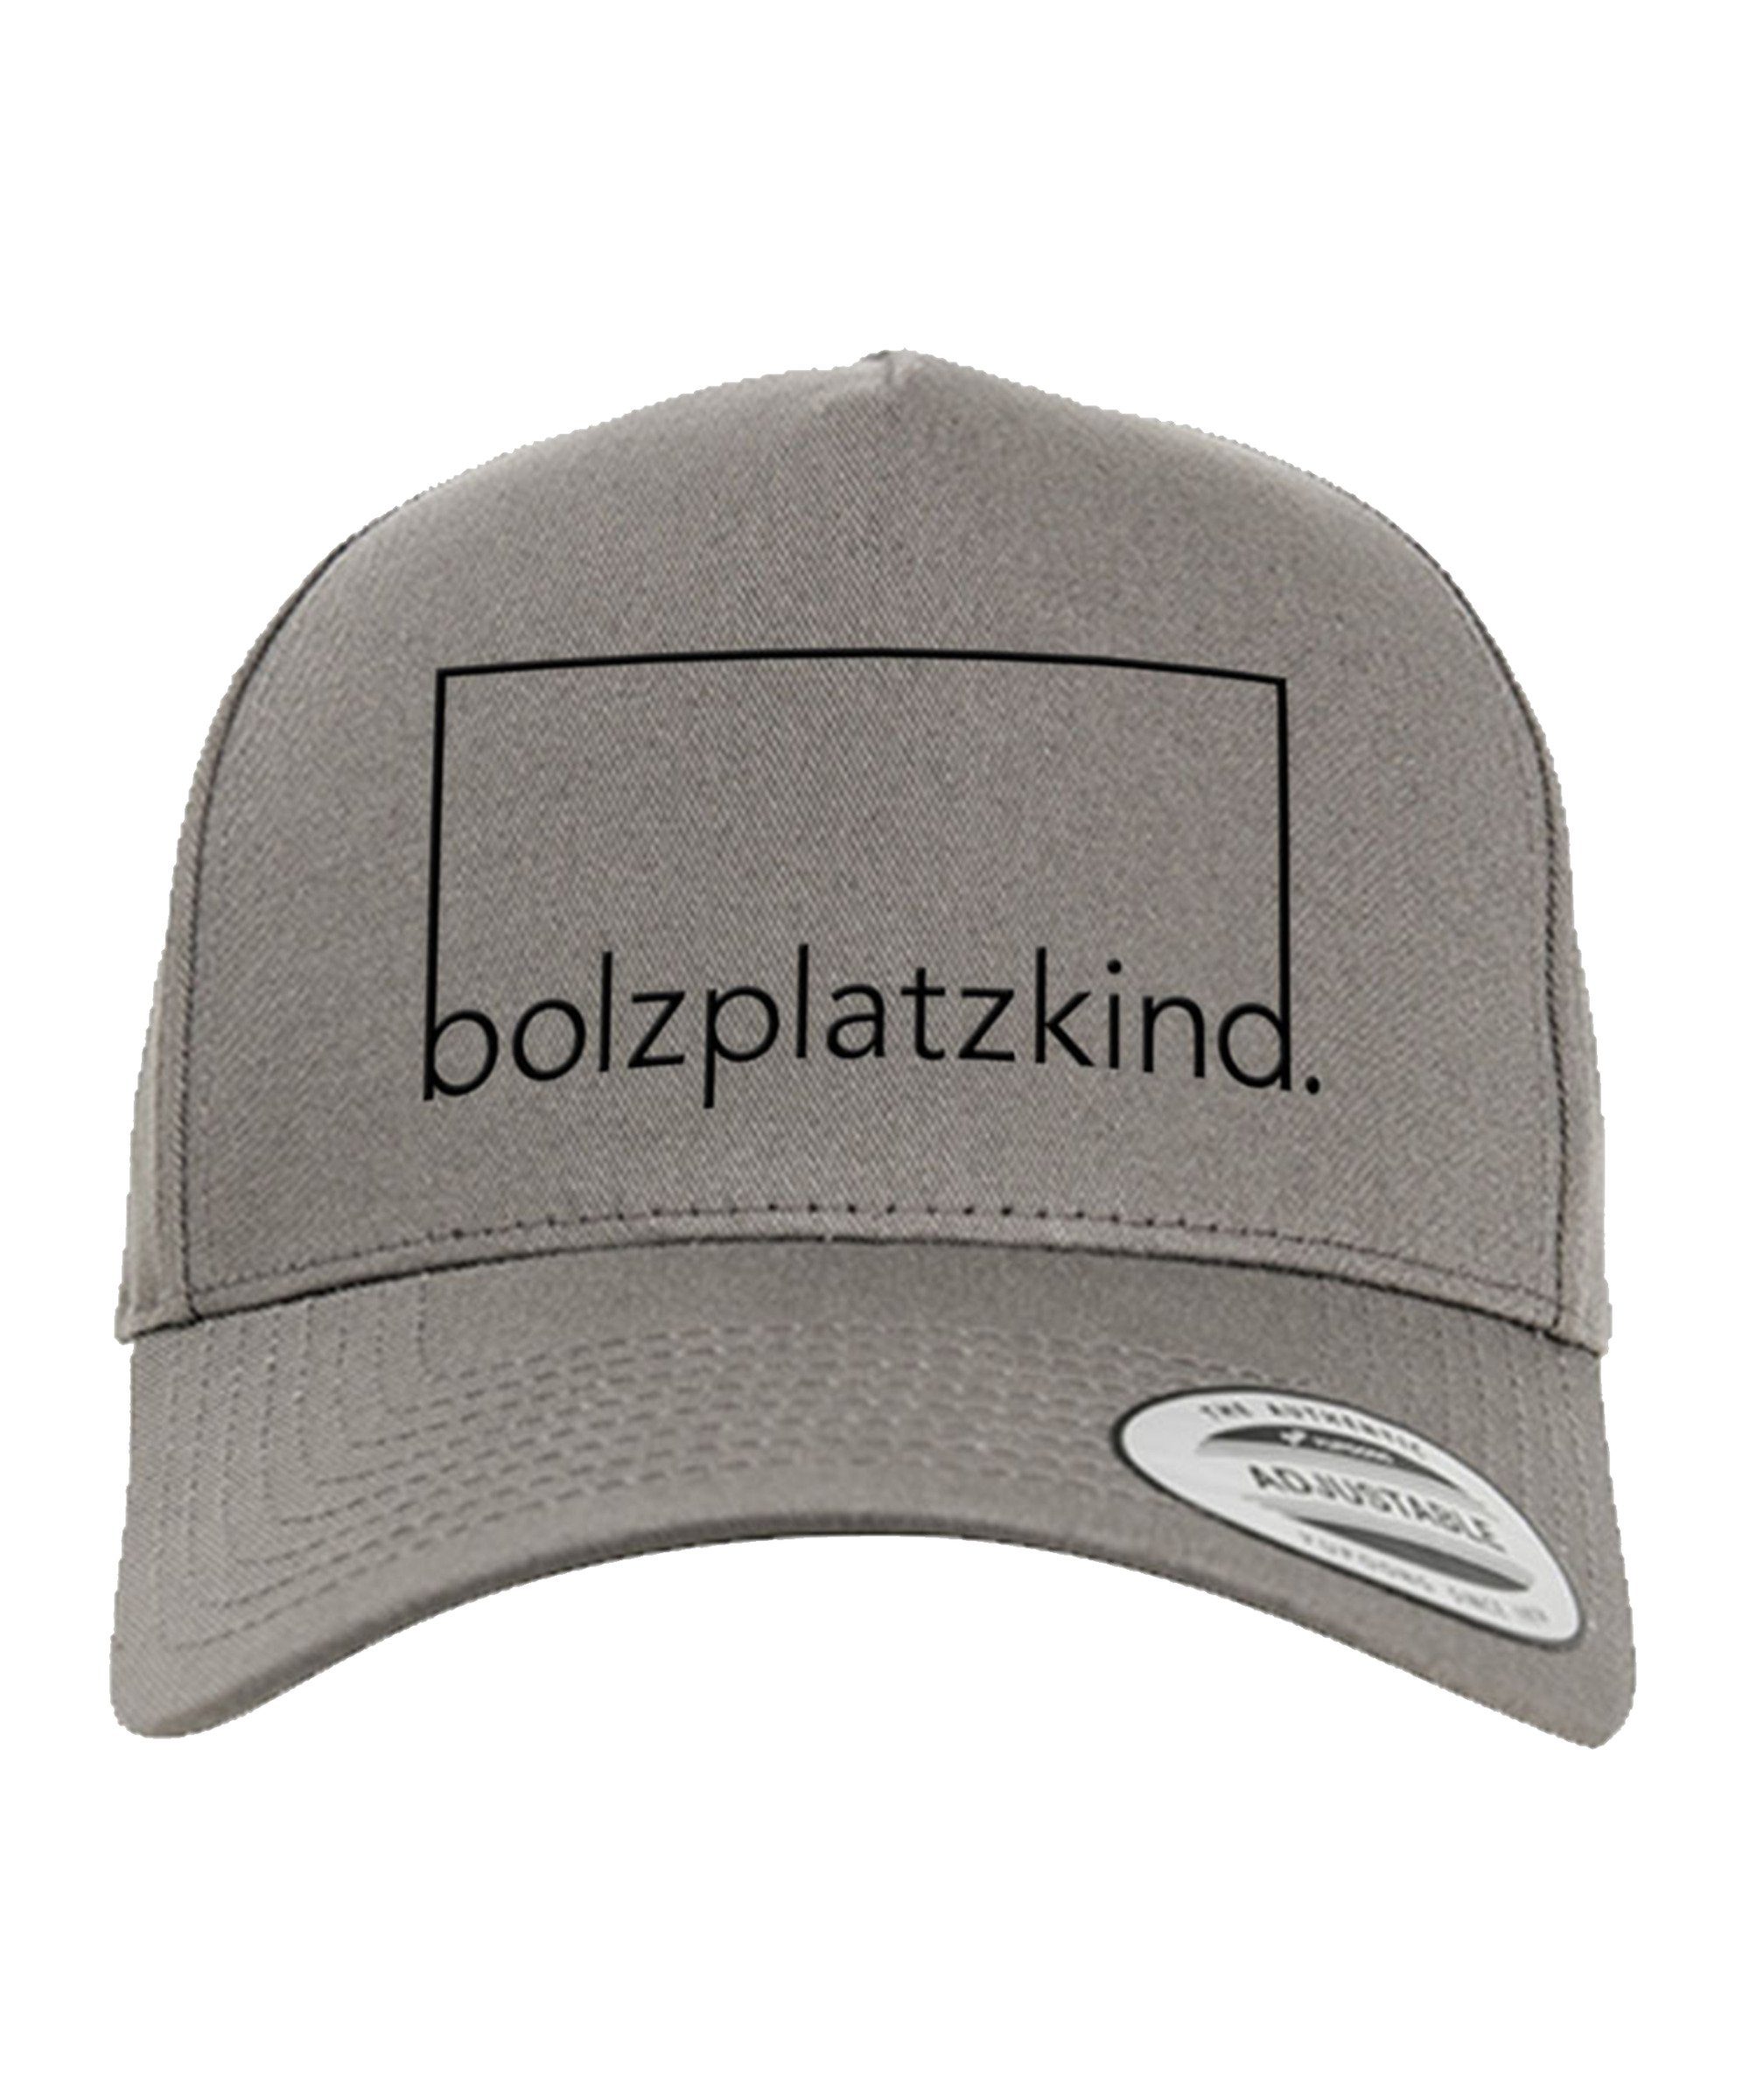 Bolzplatzkind Baseball Cap Curved Snapback Cap grauschwarz | Baseball Caps